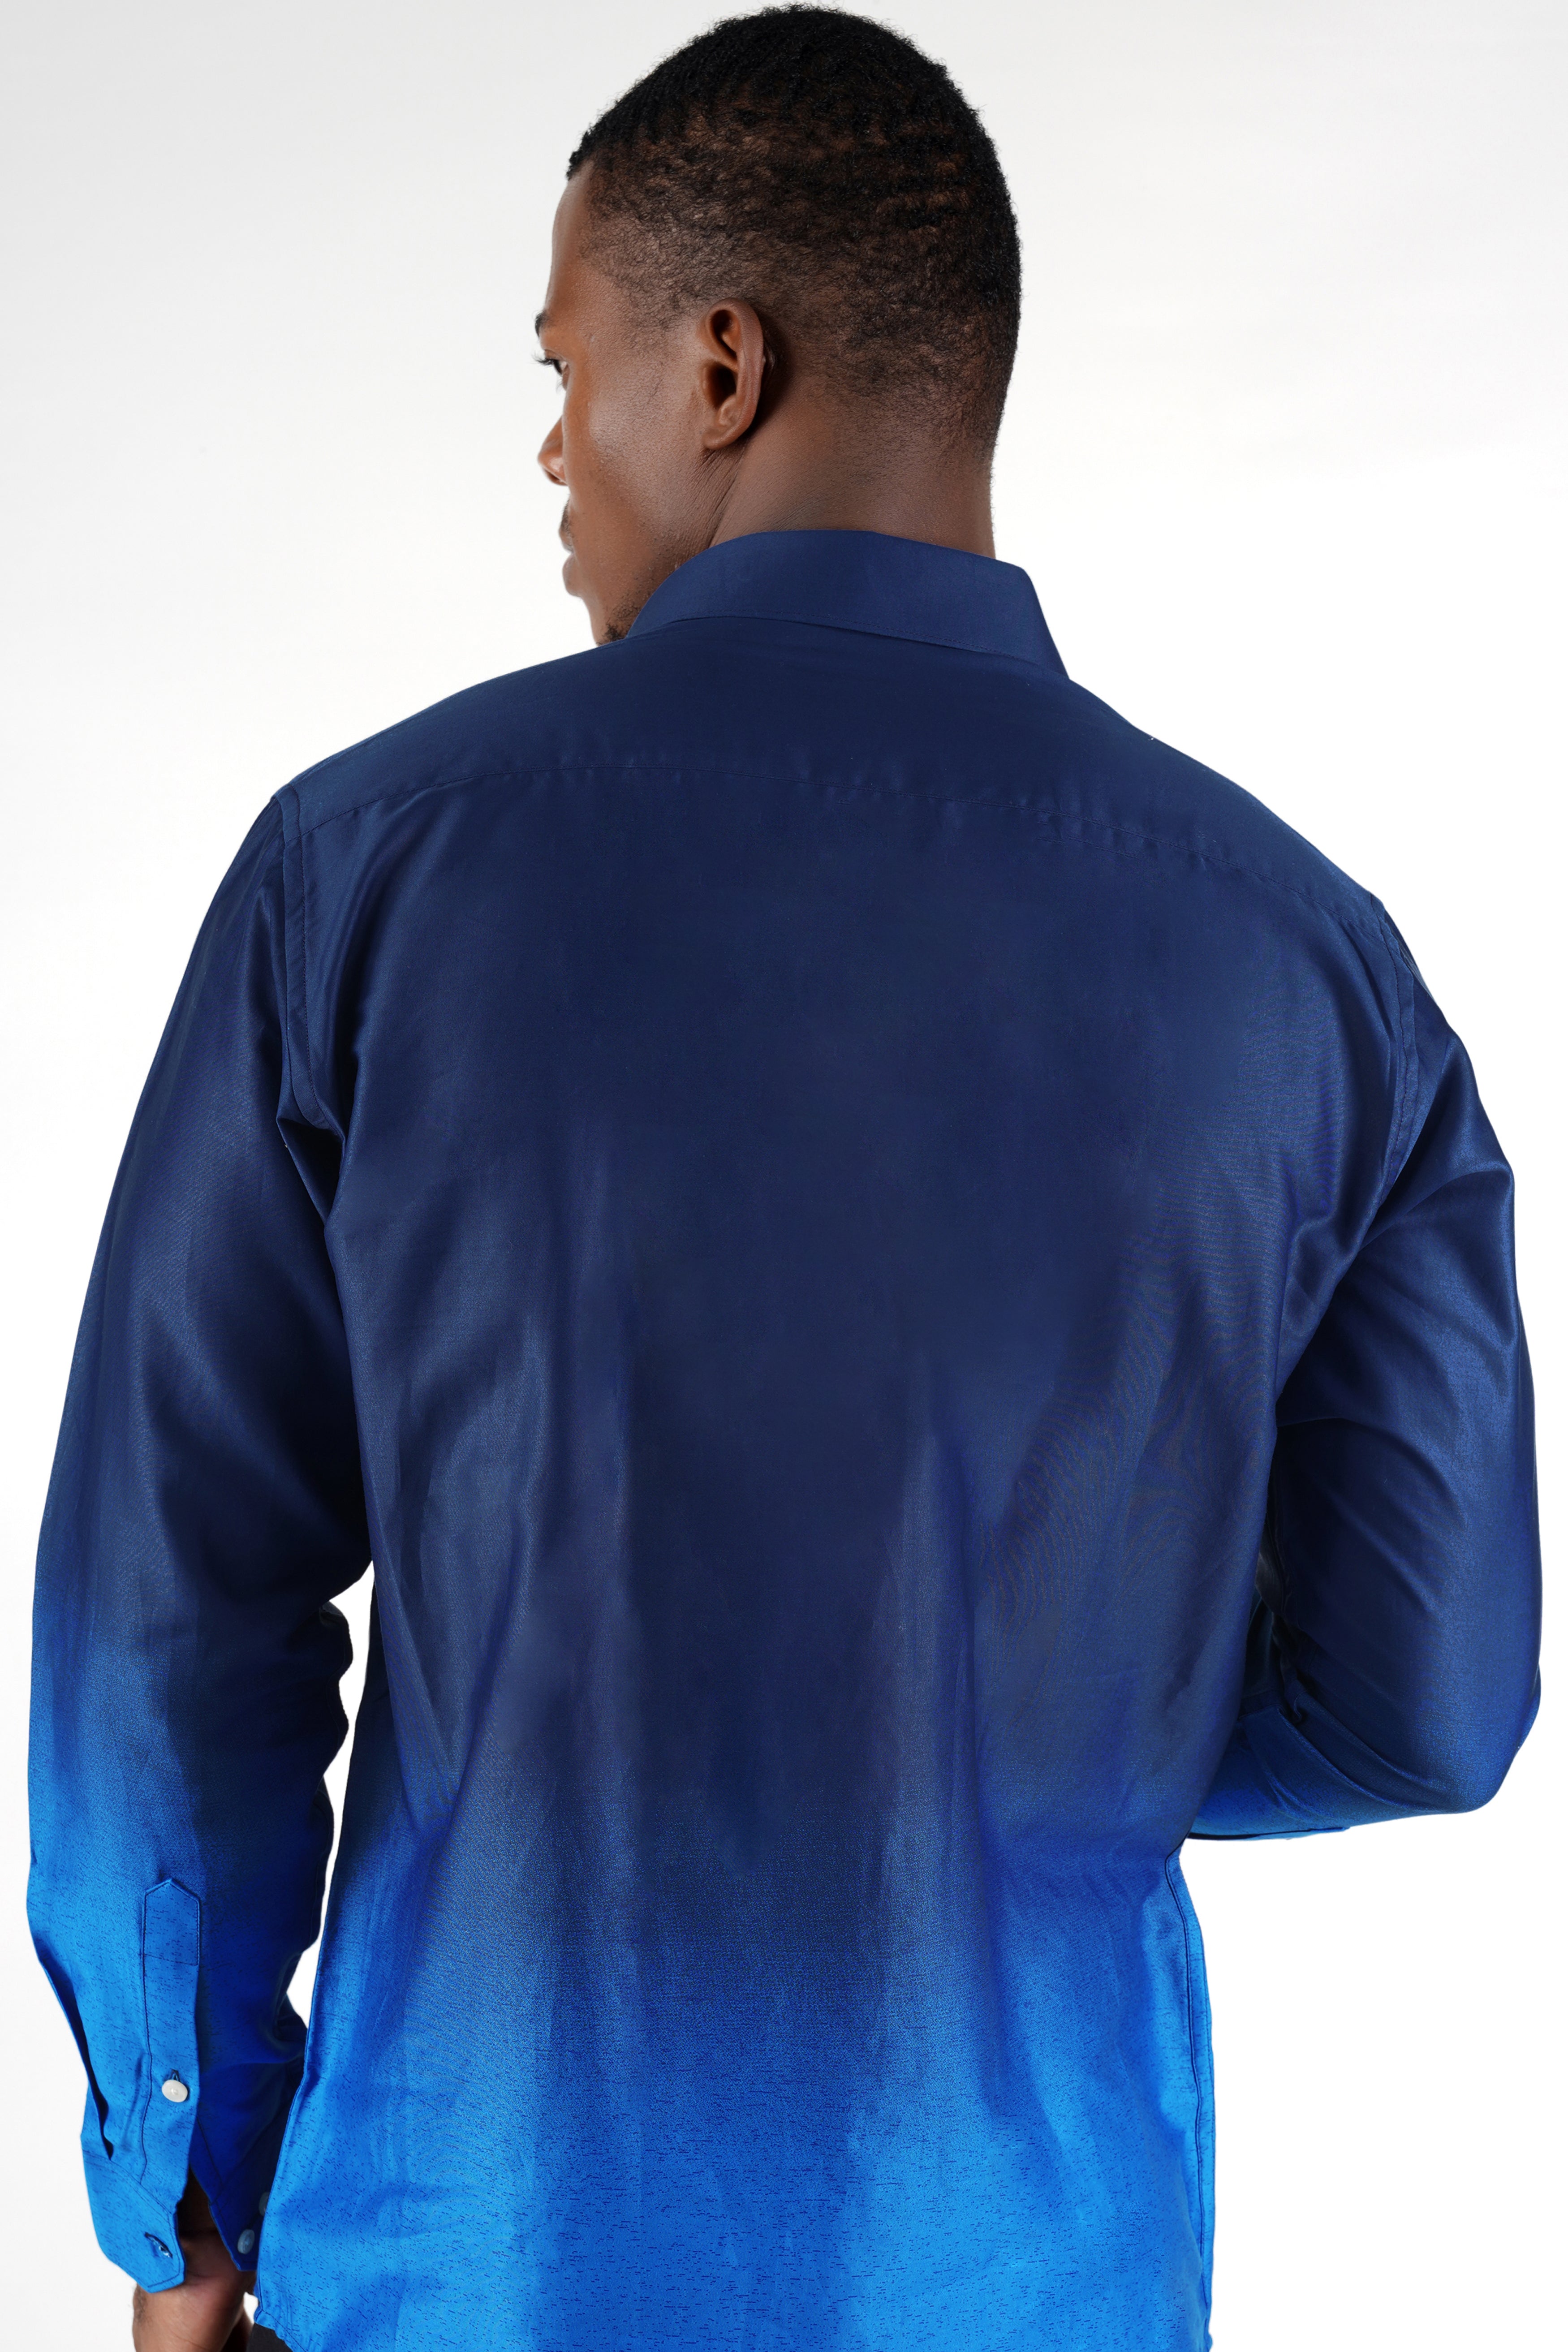 Downriver Navy Blue and Azure Blue Super Soft Premium Cotton Shirt